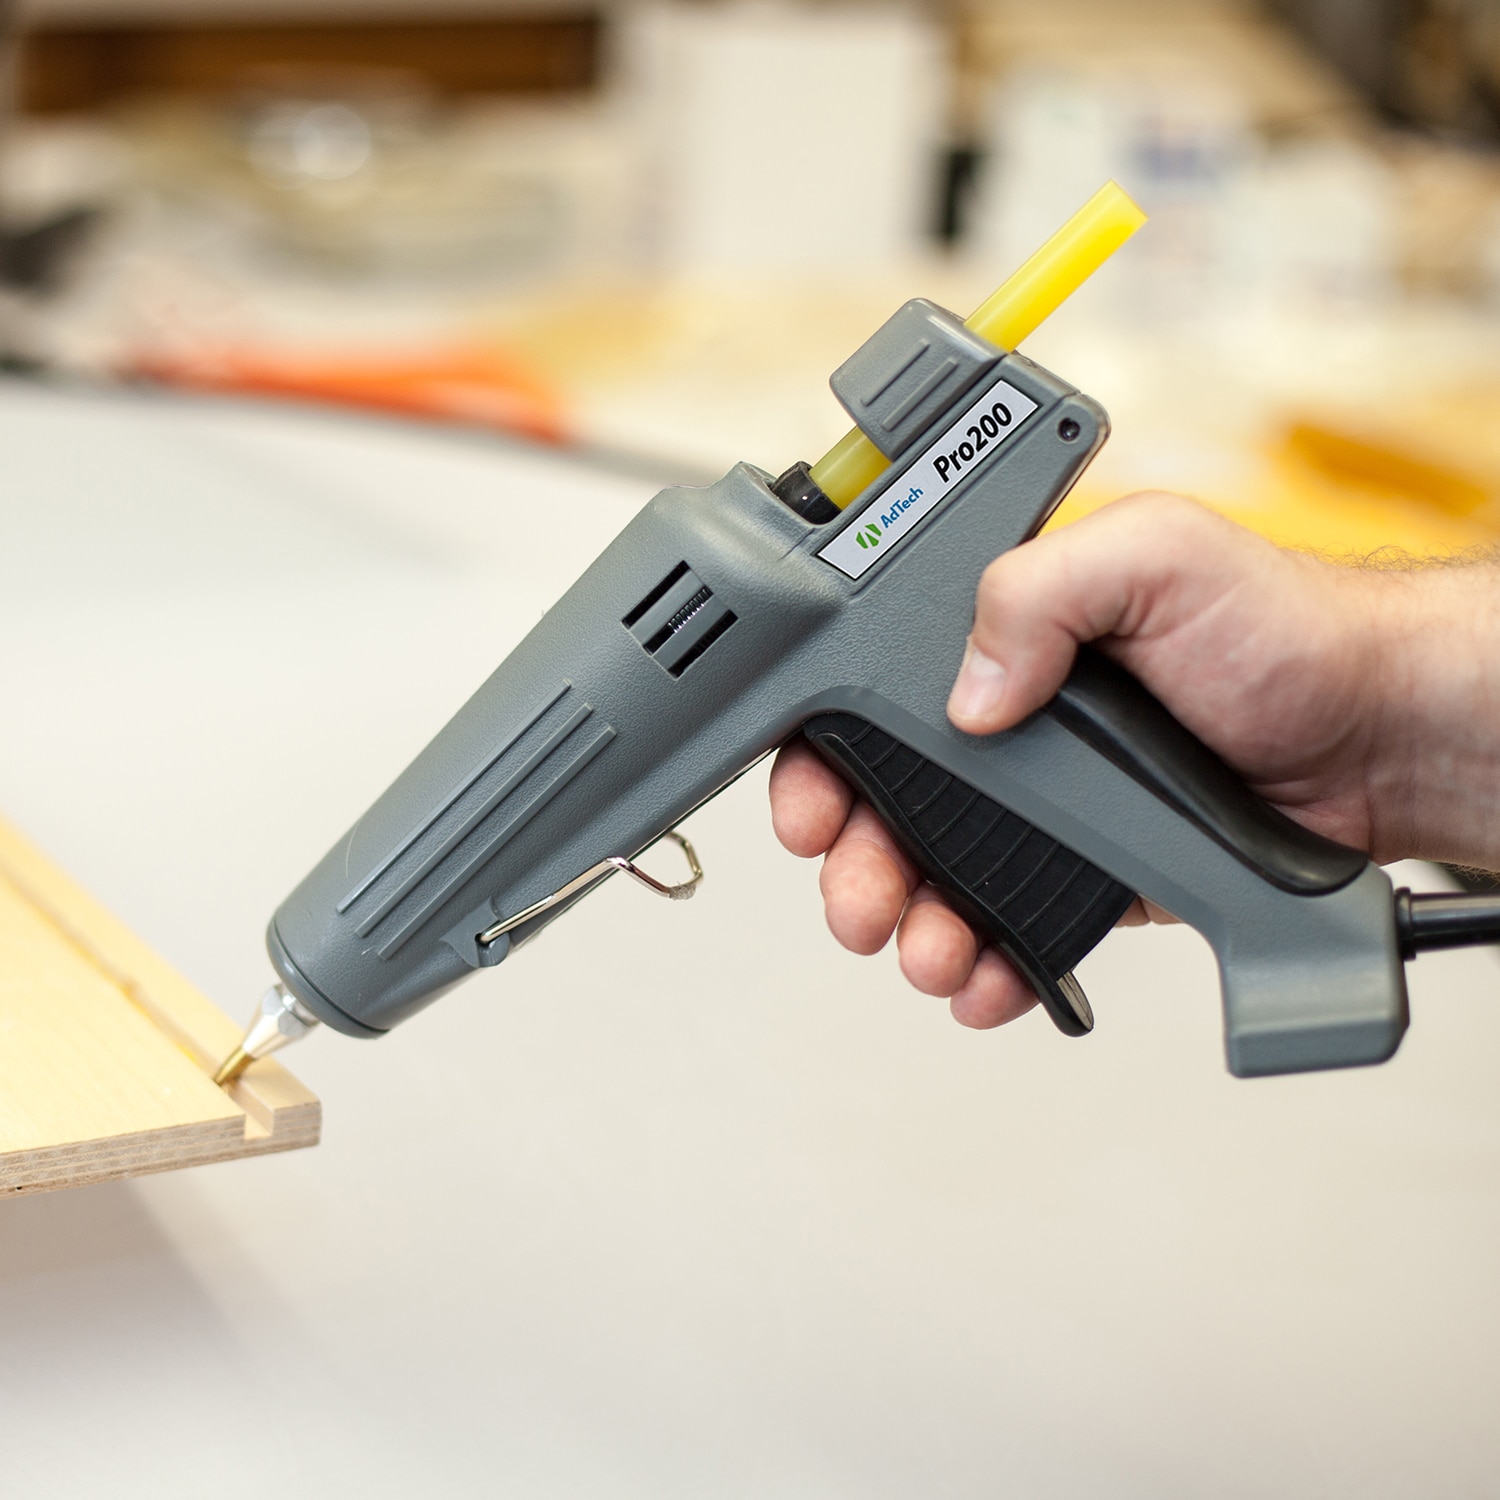 Adtech Pro 200 Industrial Full Size Glue Gun